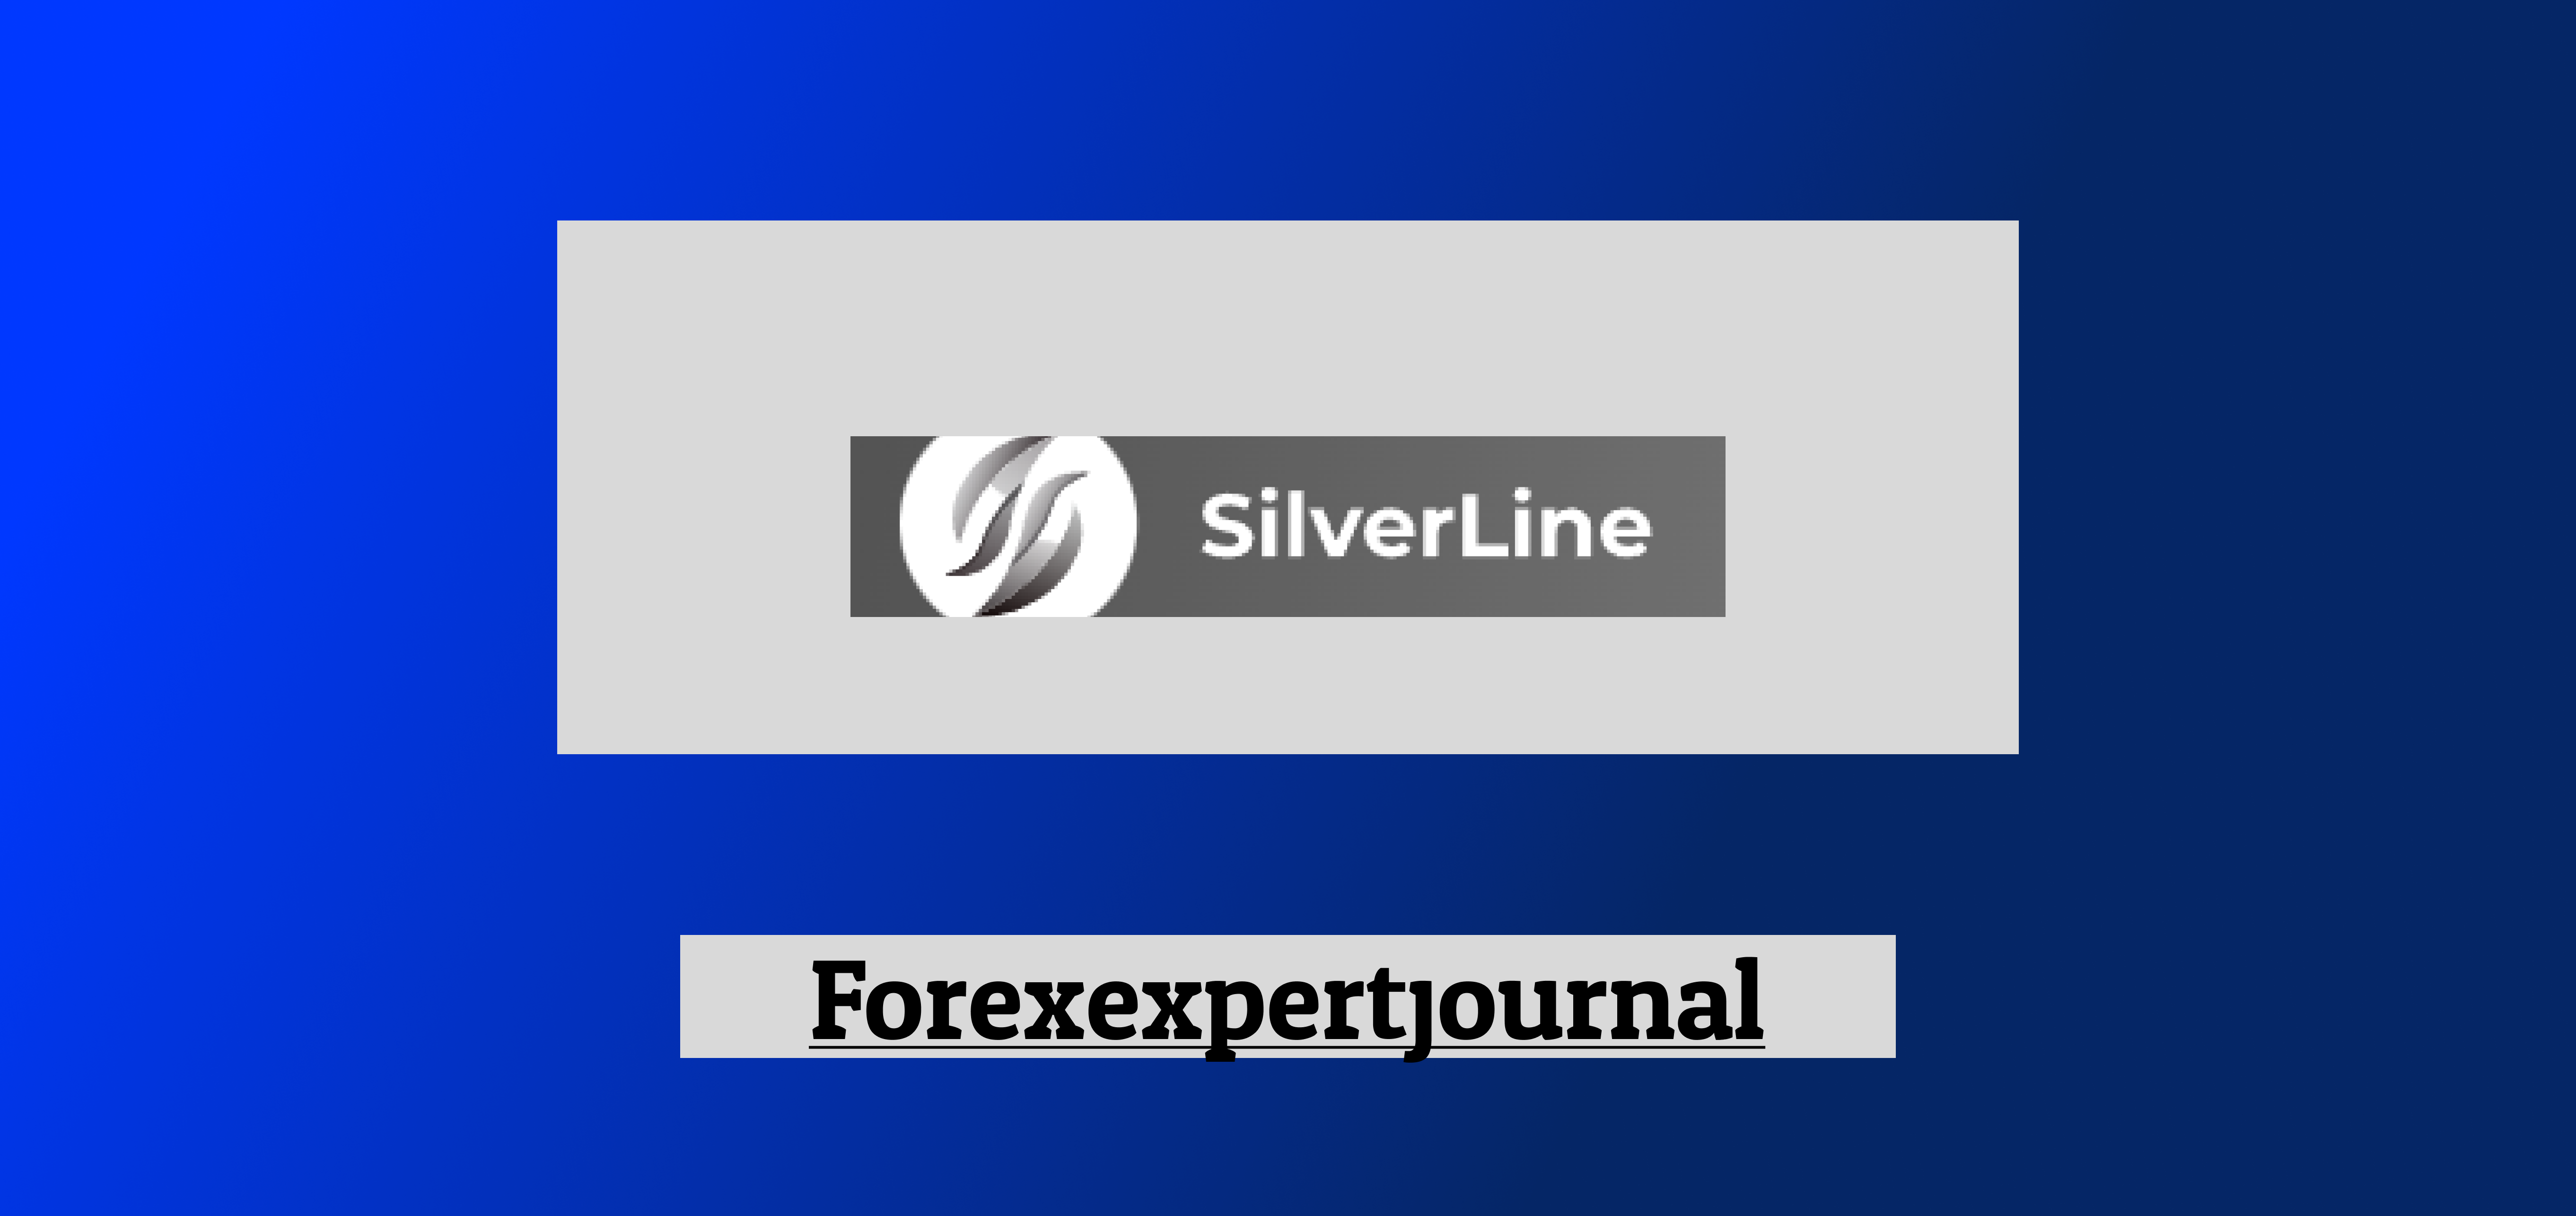 silverlinetrust.net review